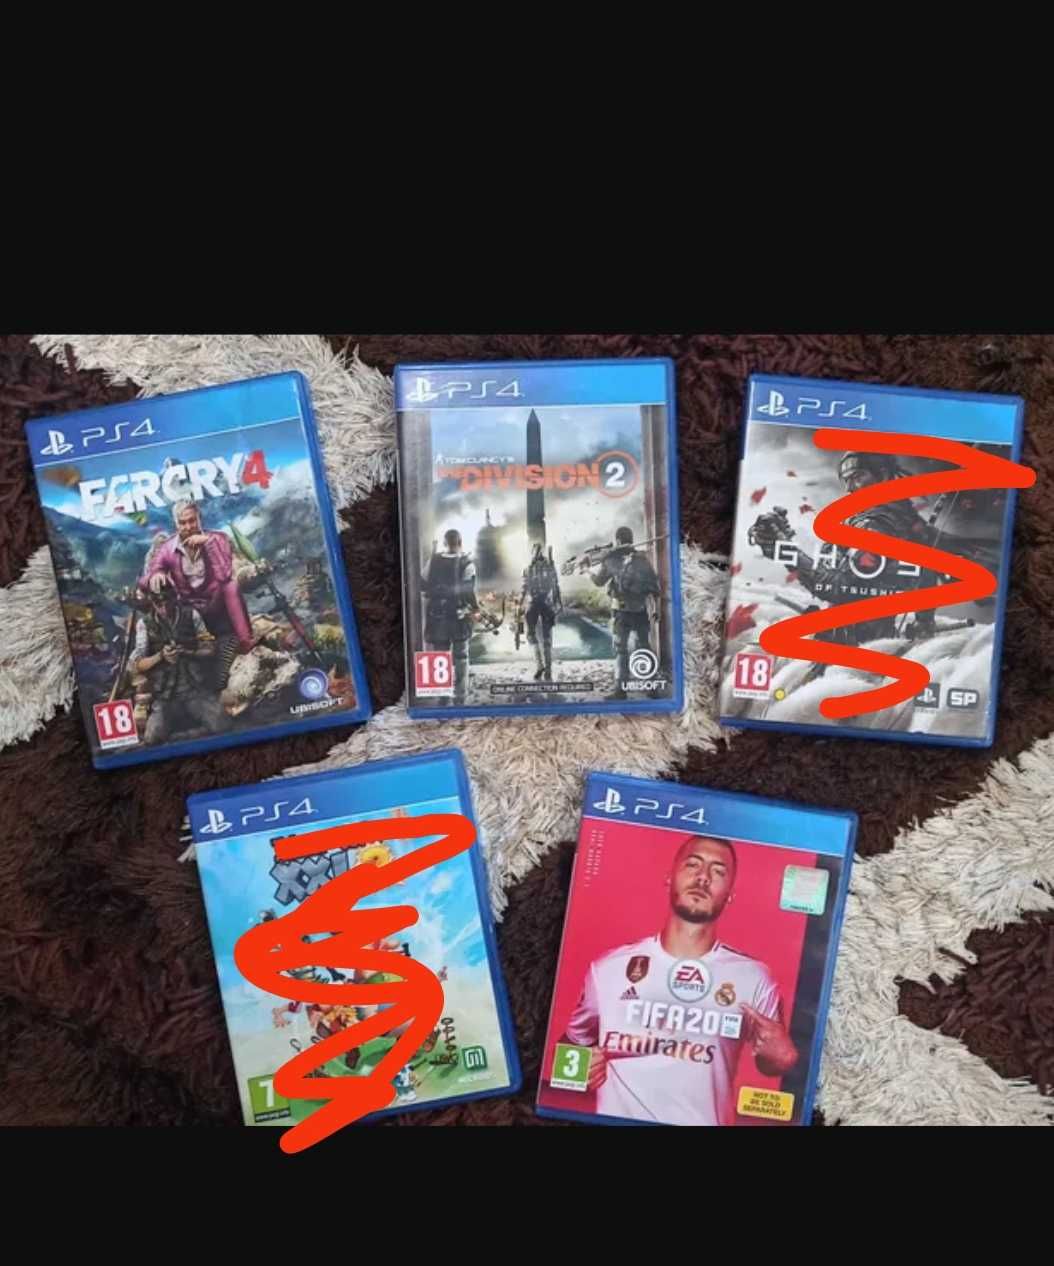 ... PS4 ... games